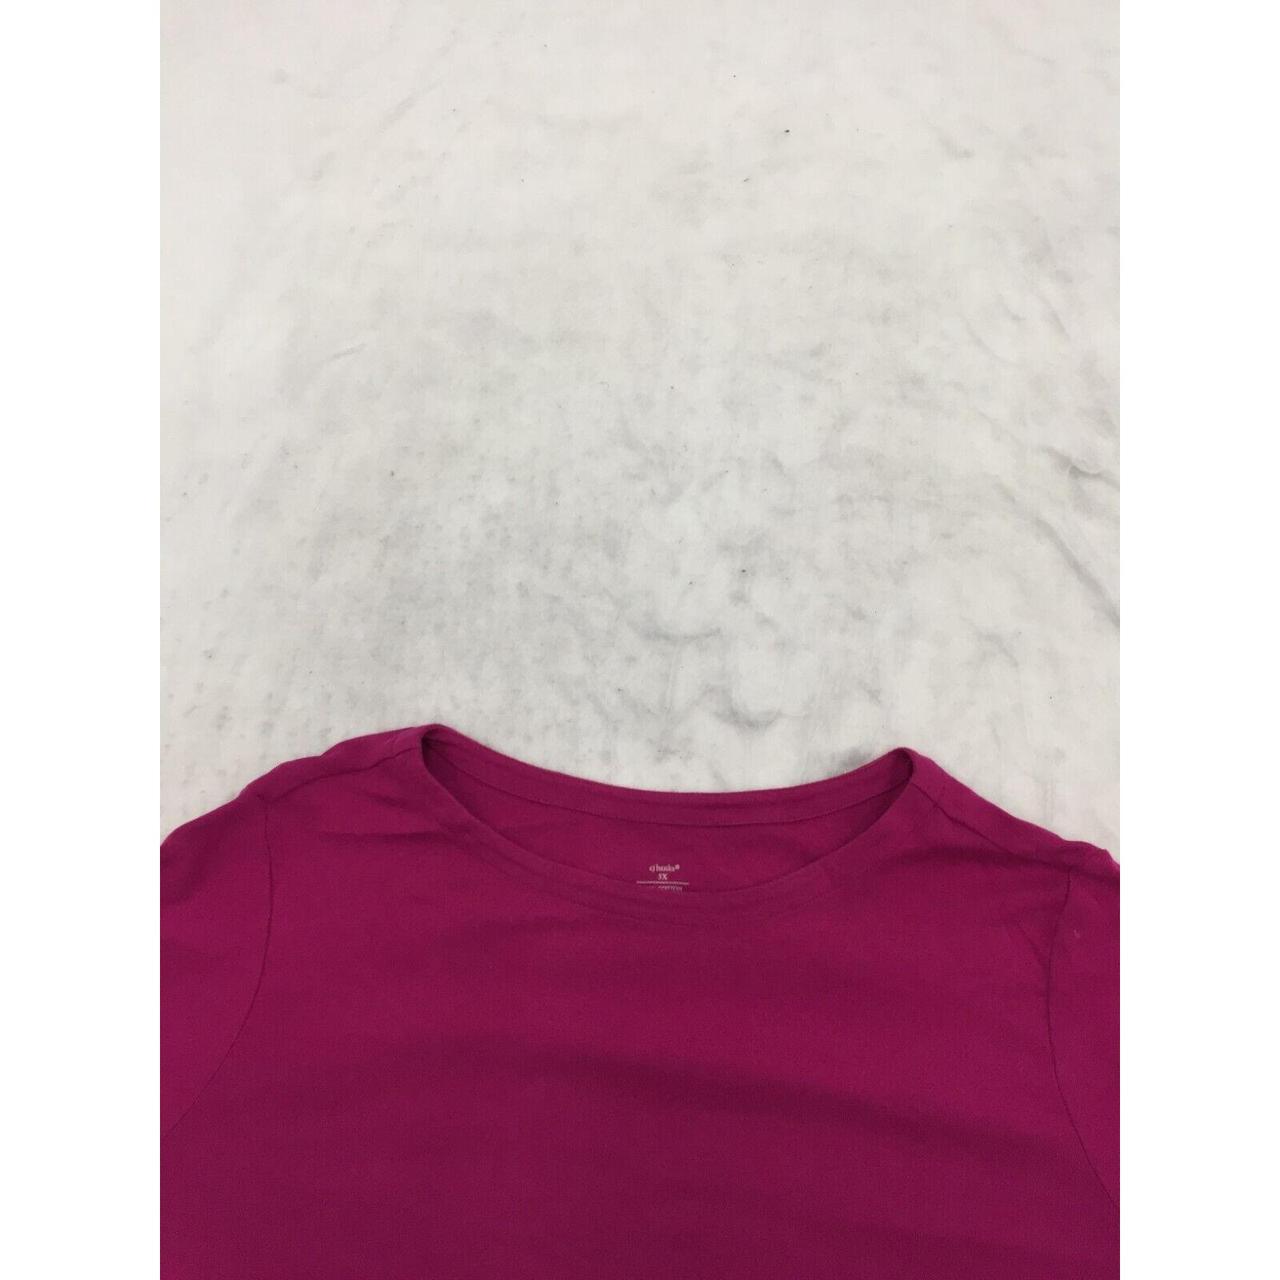 NICCE Women's Pink T-shirt (2)